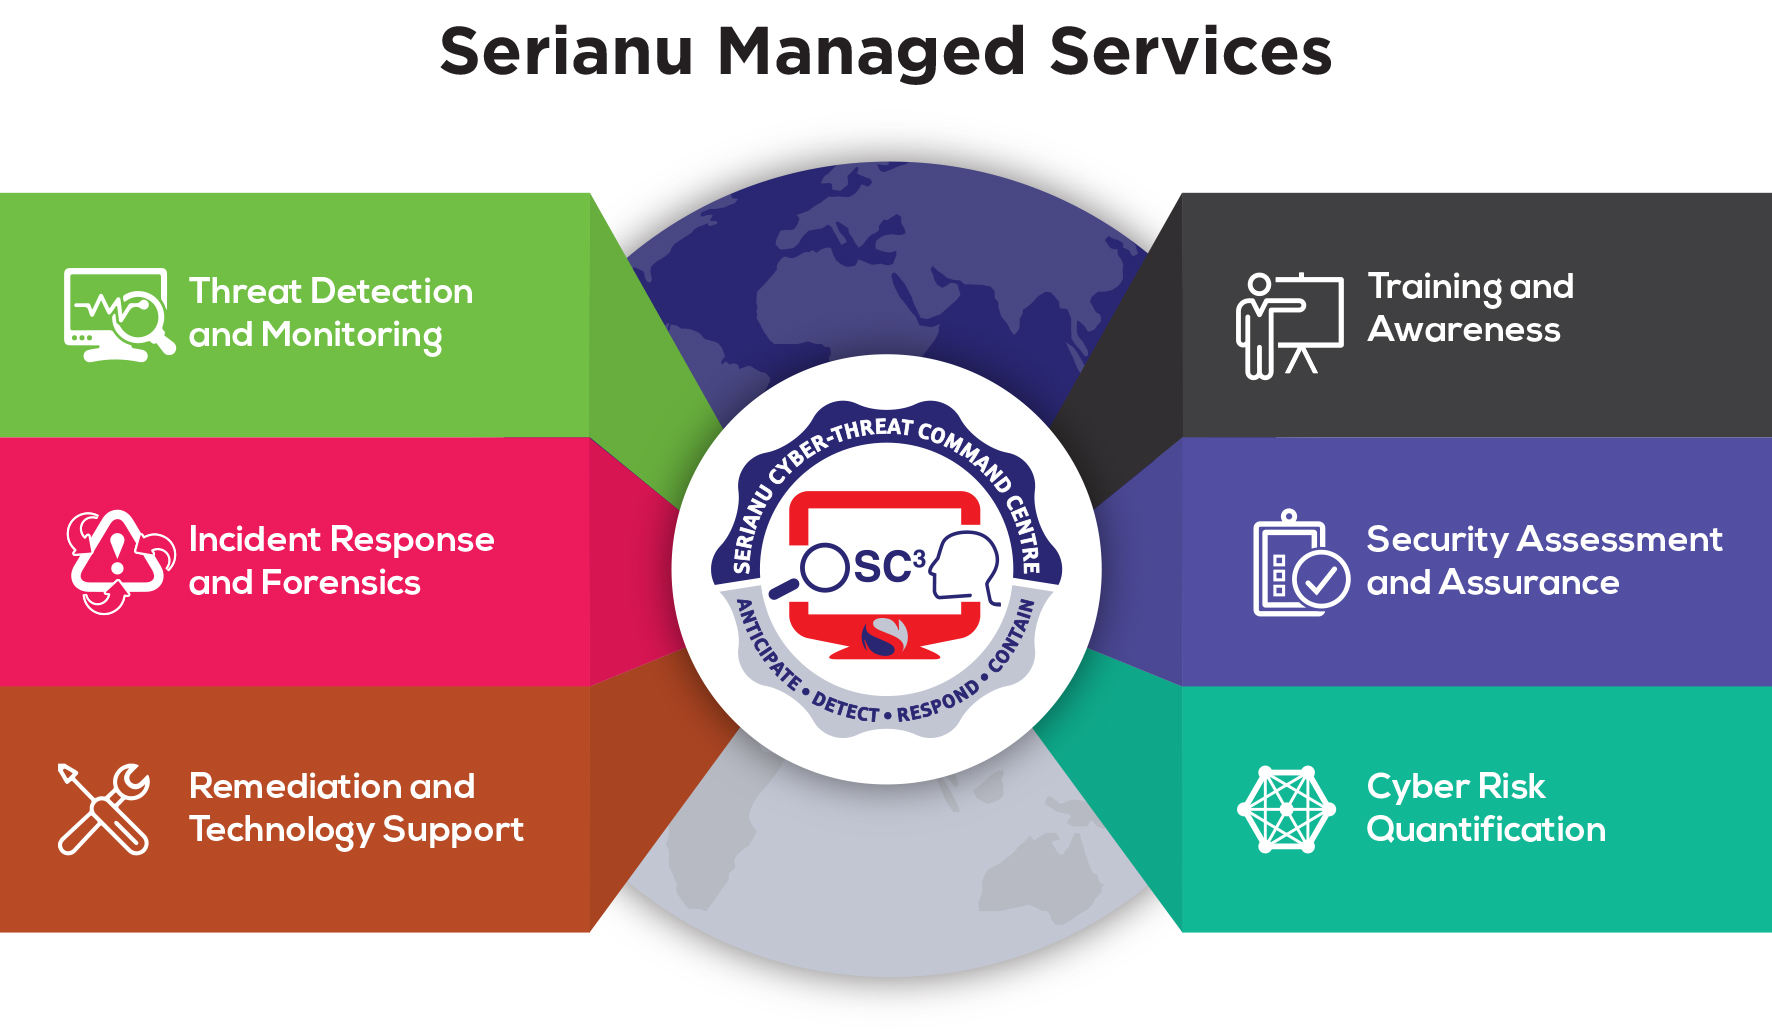 Serianu Managed Services